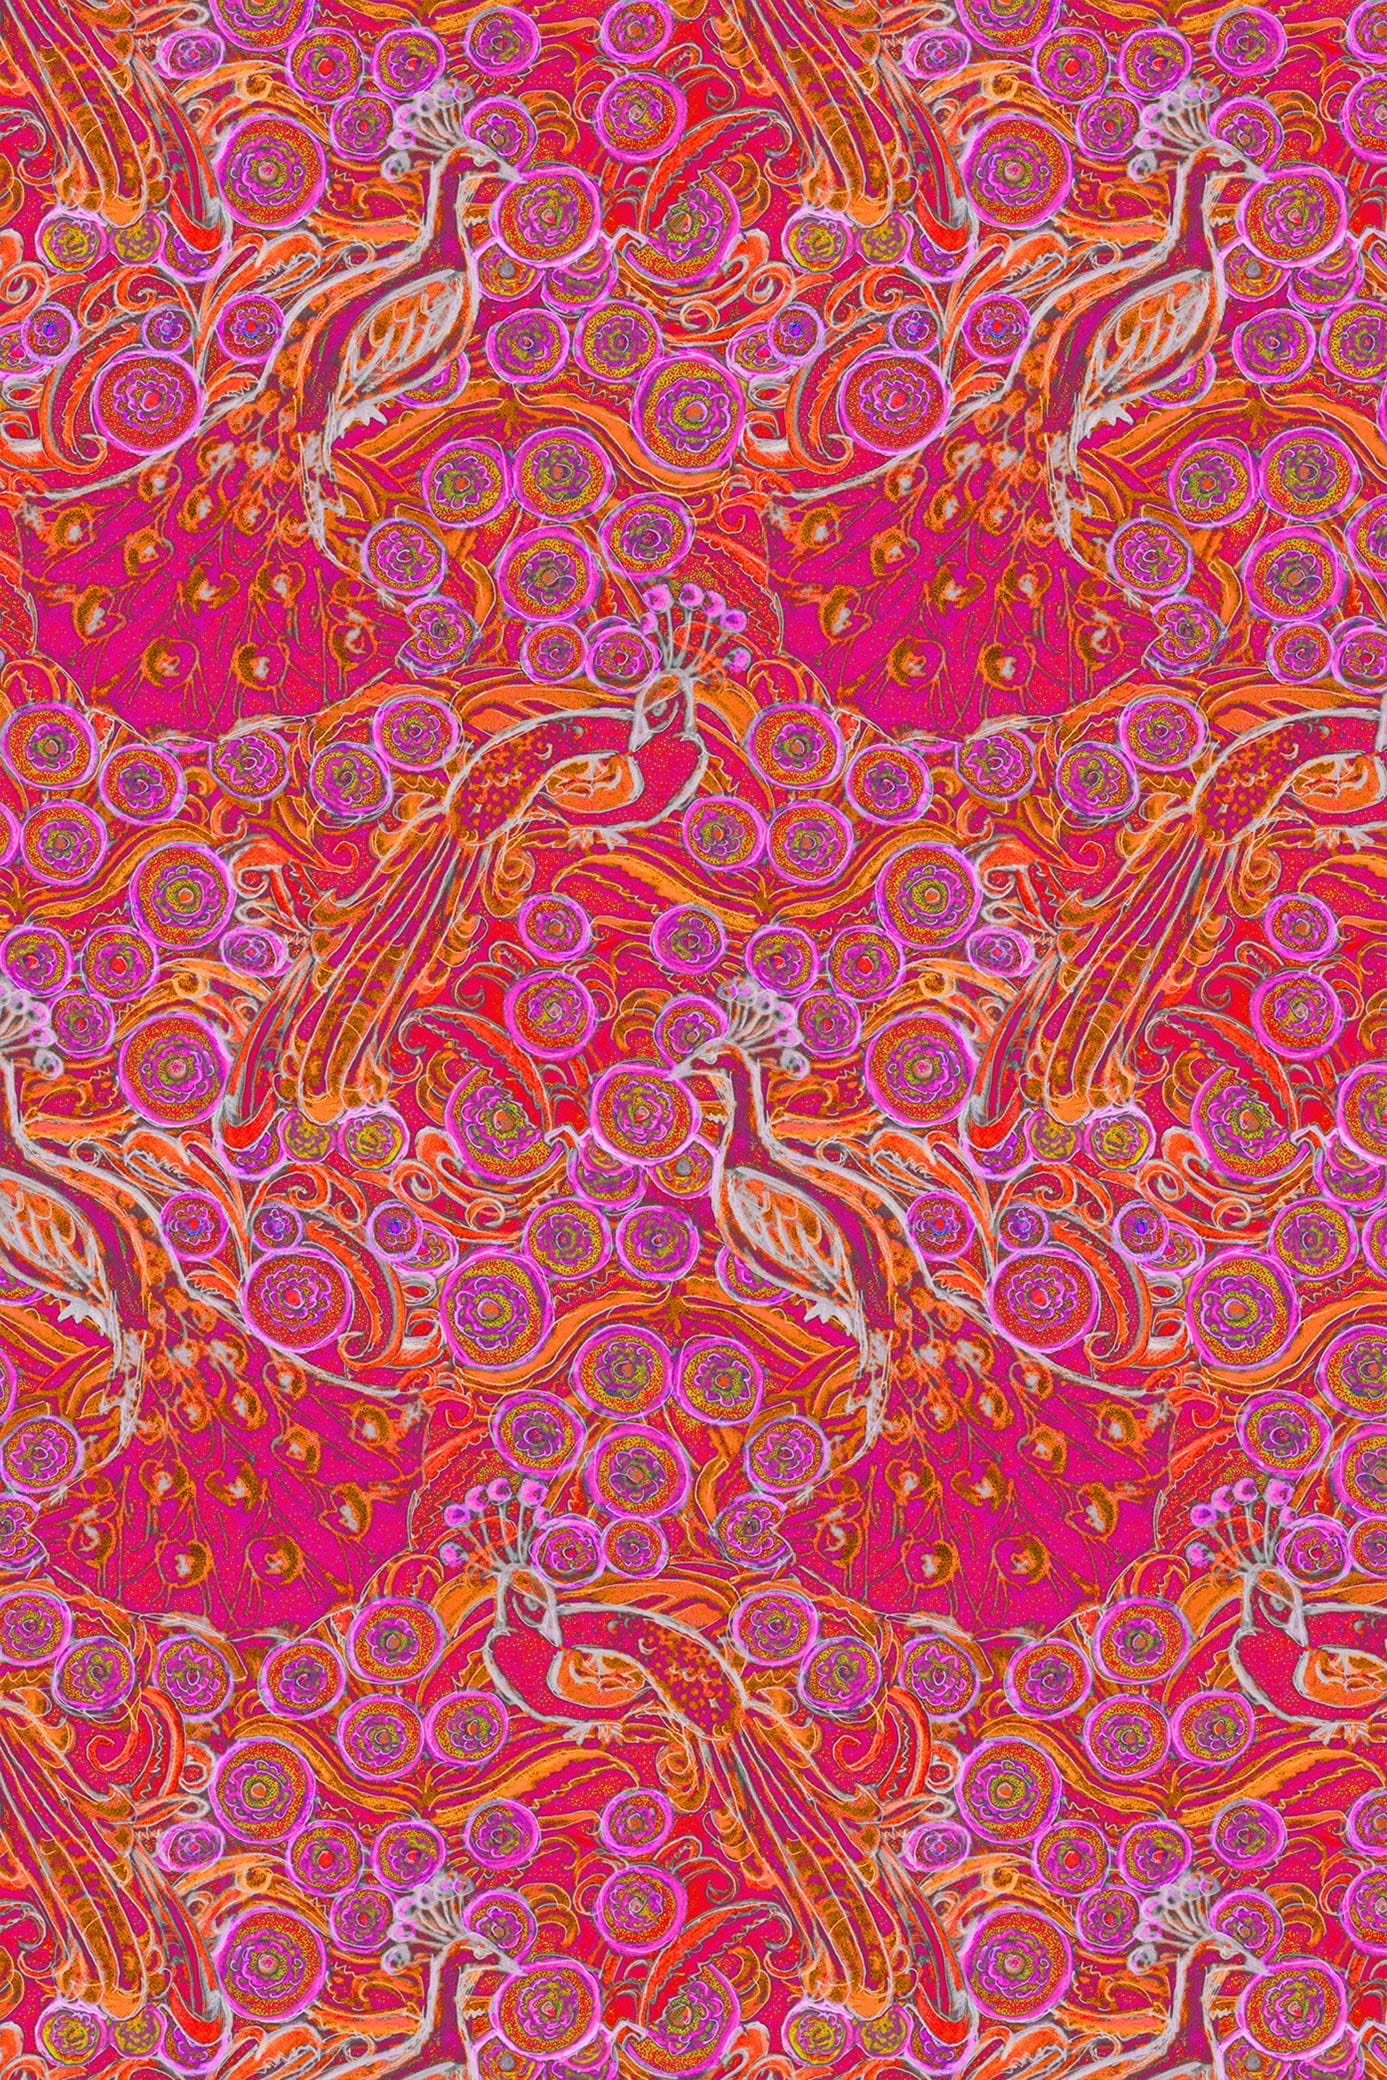 W.E.T. by Ines Schneider Shirt Shirt Chiara 22 / Pavone mode hamburg print sommerkleid Unique Prints Summer Dress Handdesignierte Prints Print